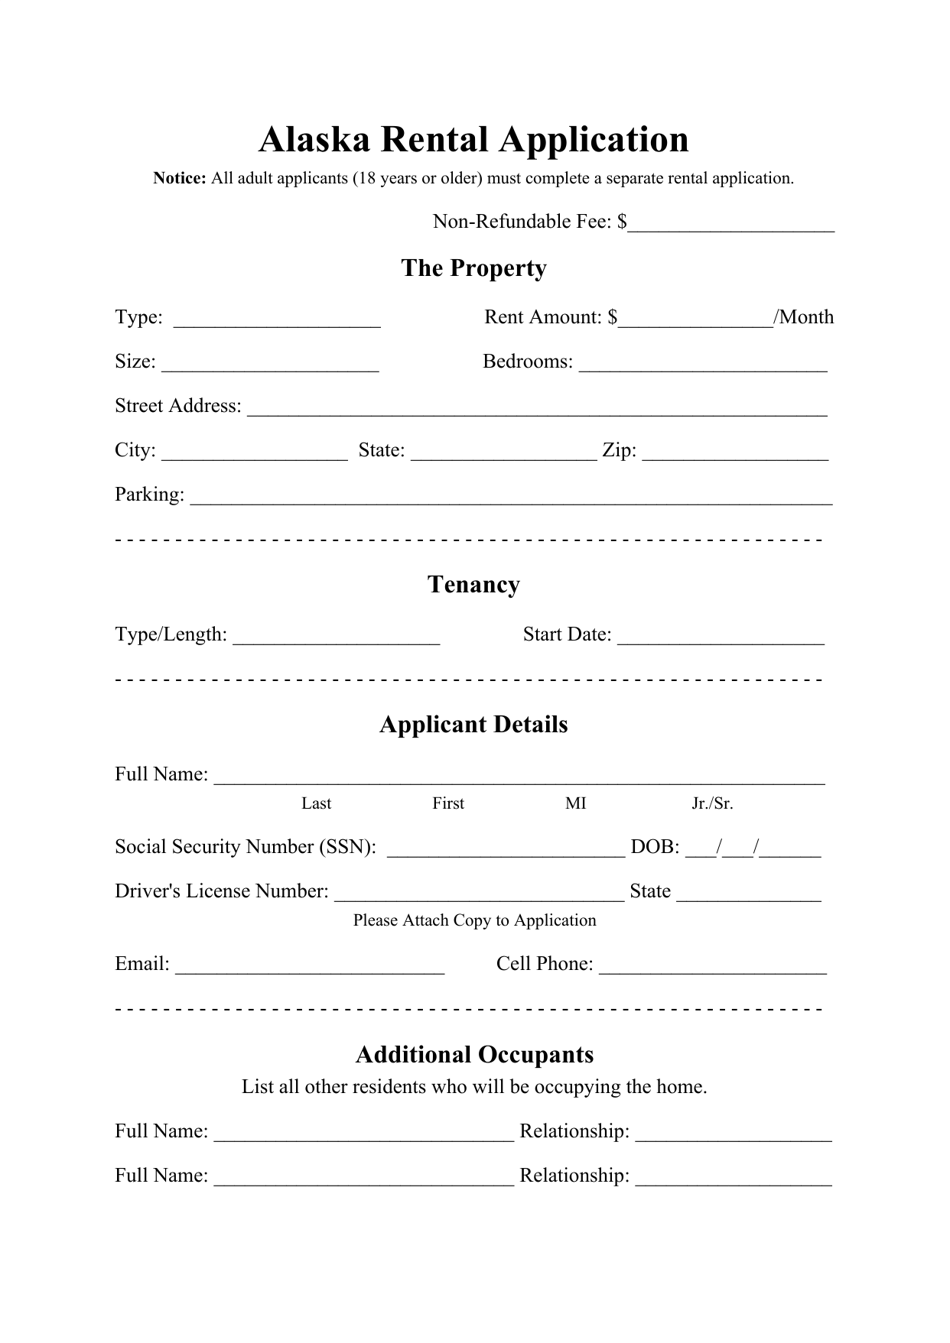 Rental Application Form - Alaska, Page 1